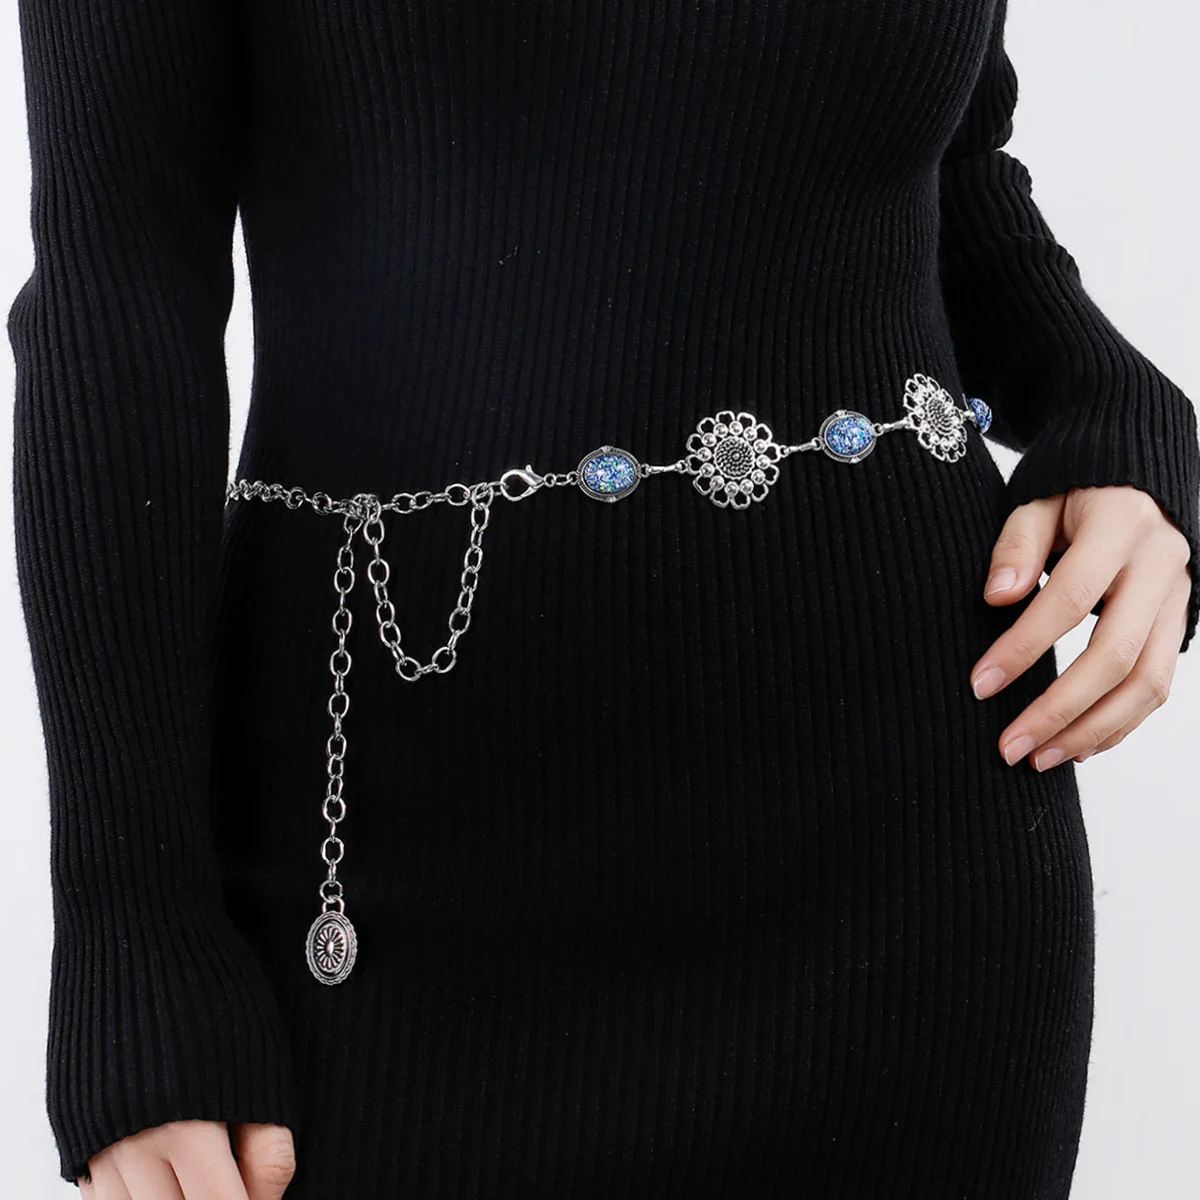 

Women's waist chain with retro metal cutout inlay